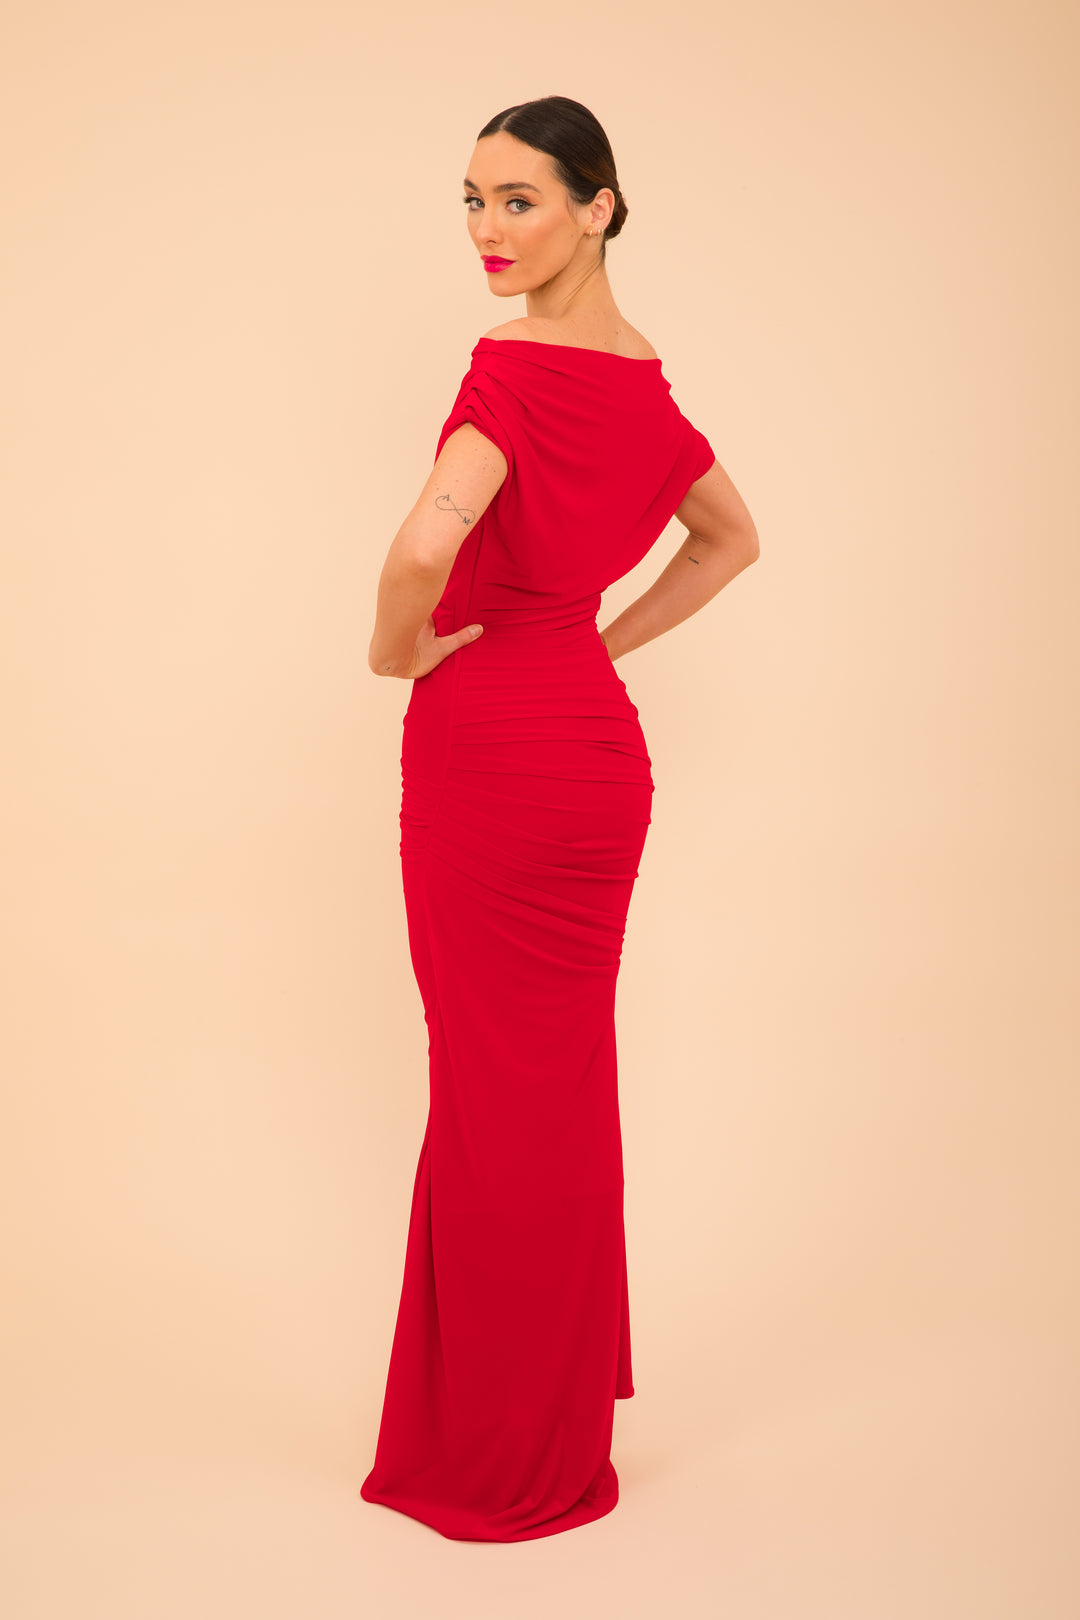 ATOM LABEL platinum gown in red